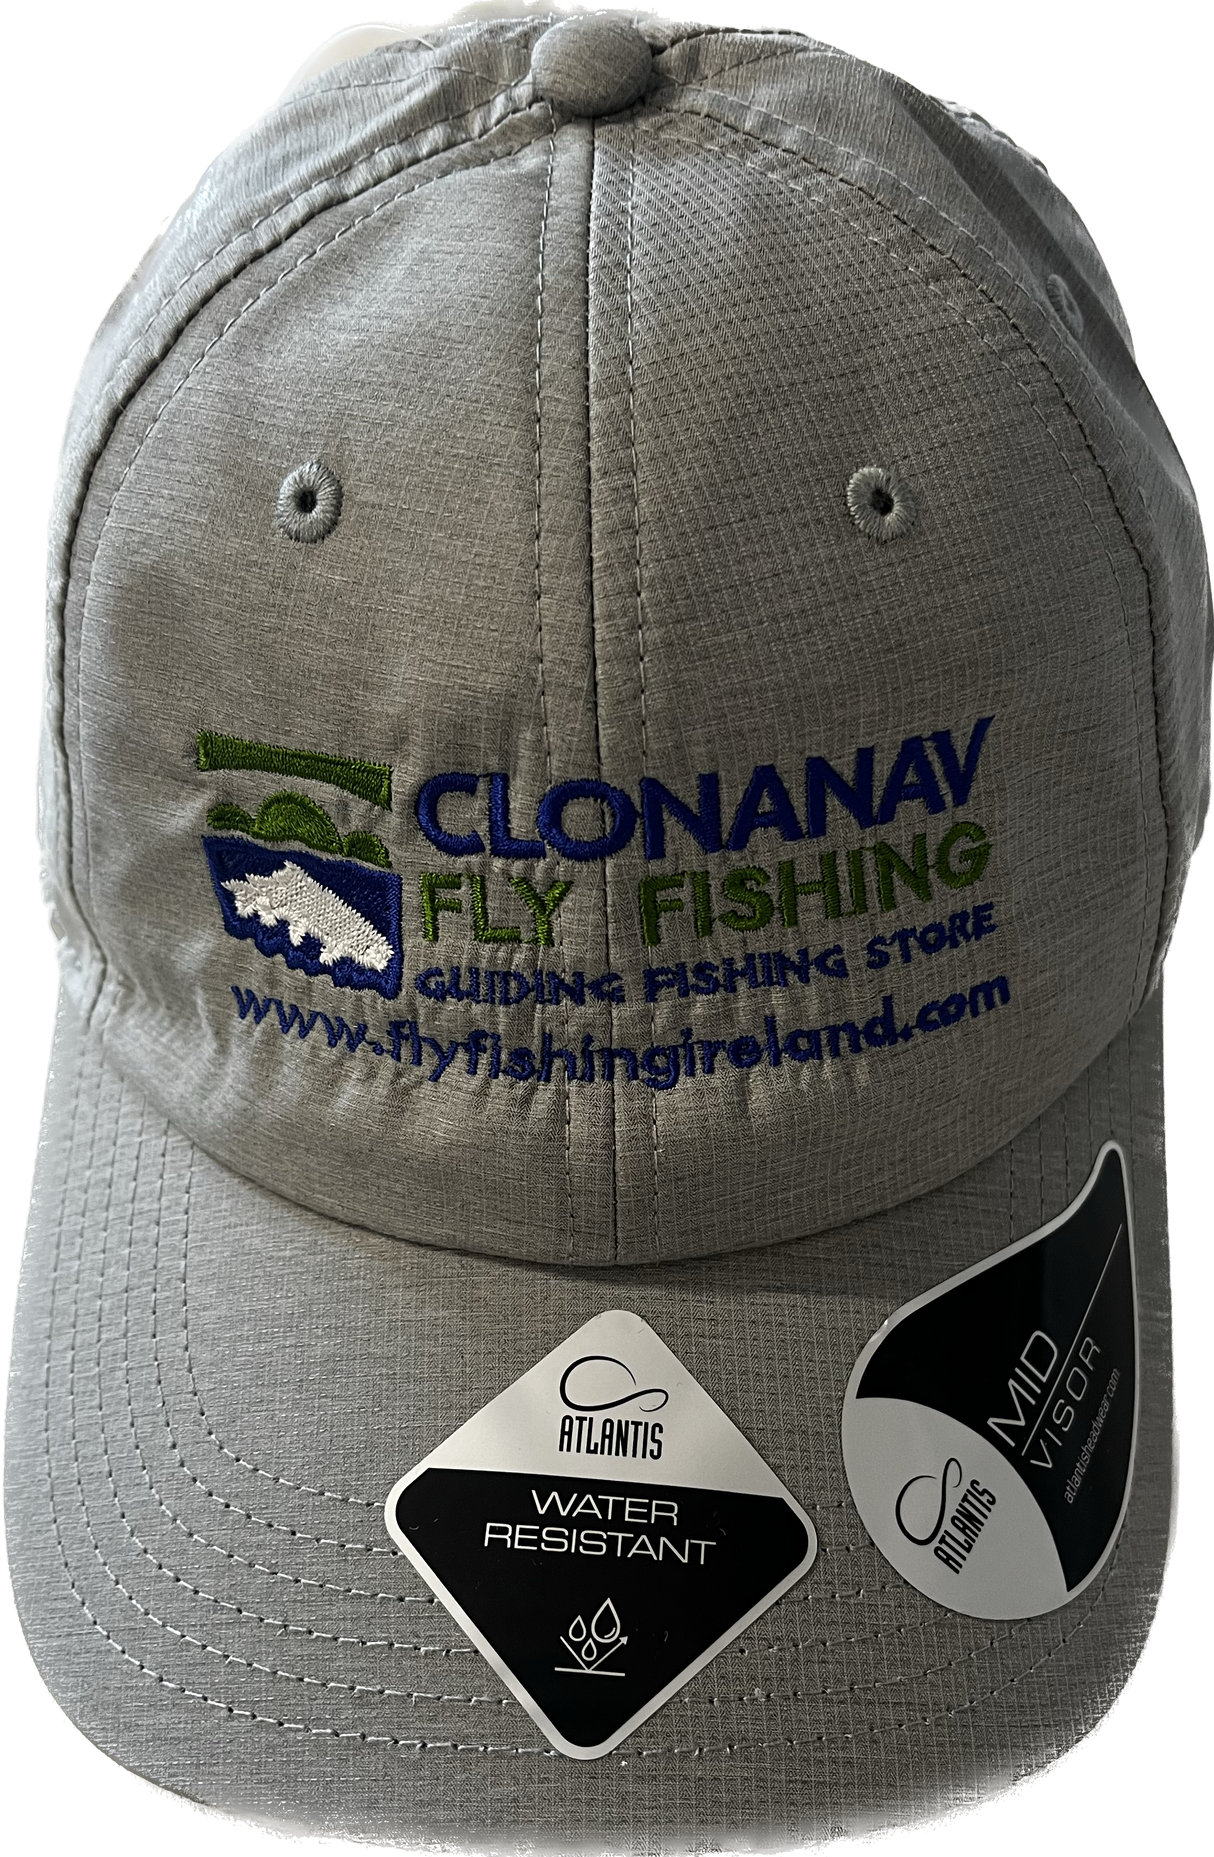 Clonanav Water Resistant Cap - Grey